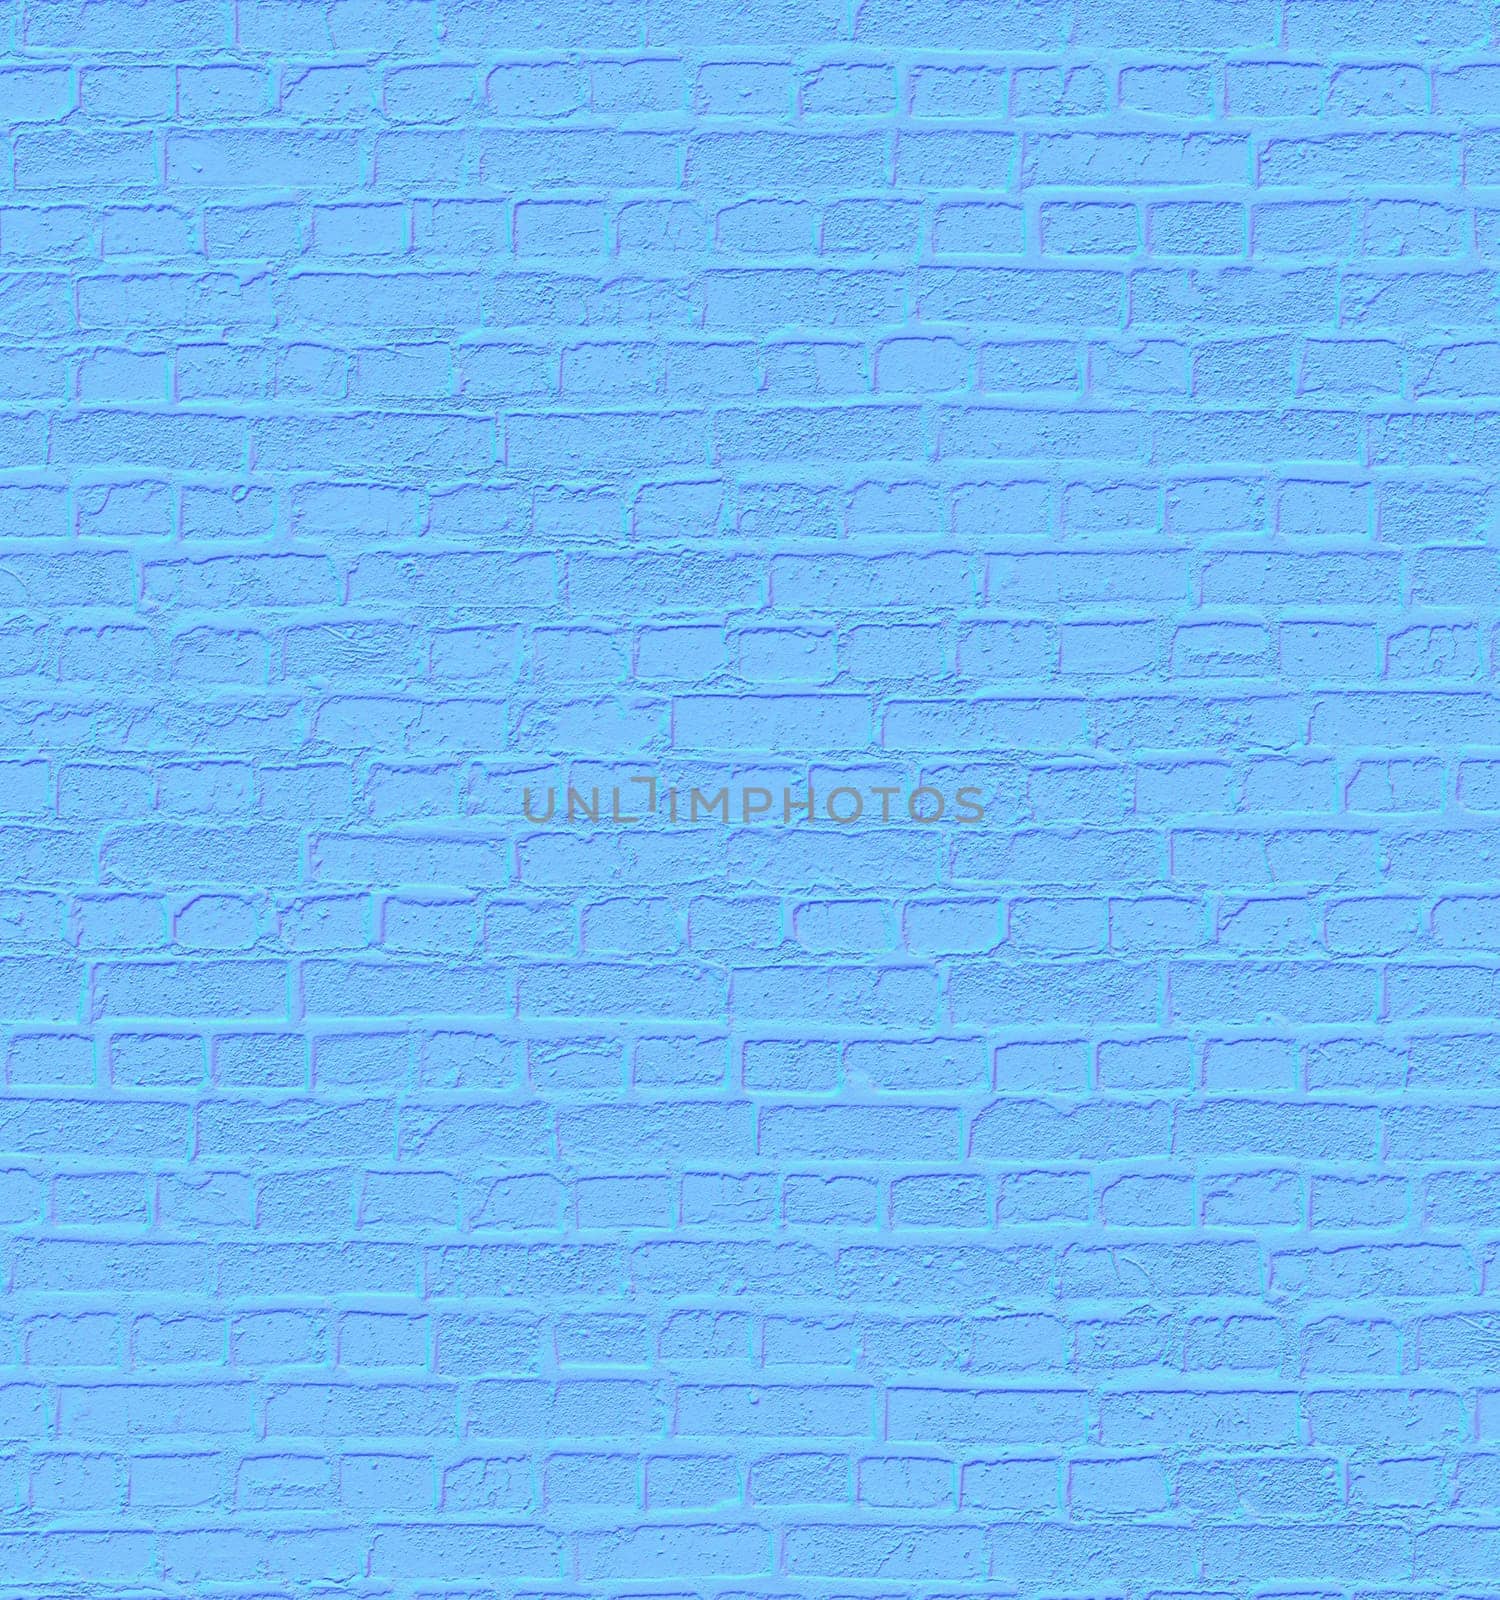 Blue textured brick background in close-up. Background texture by Mastak80